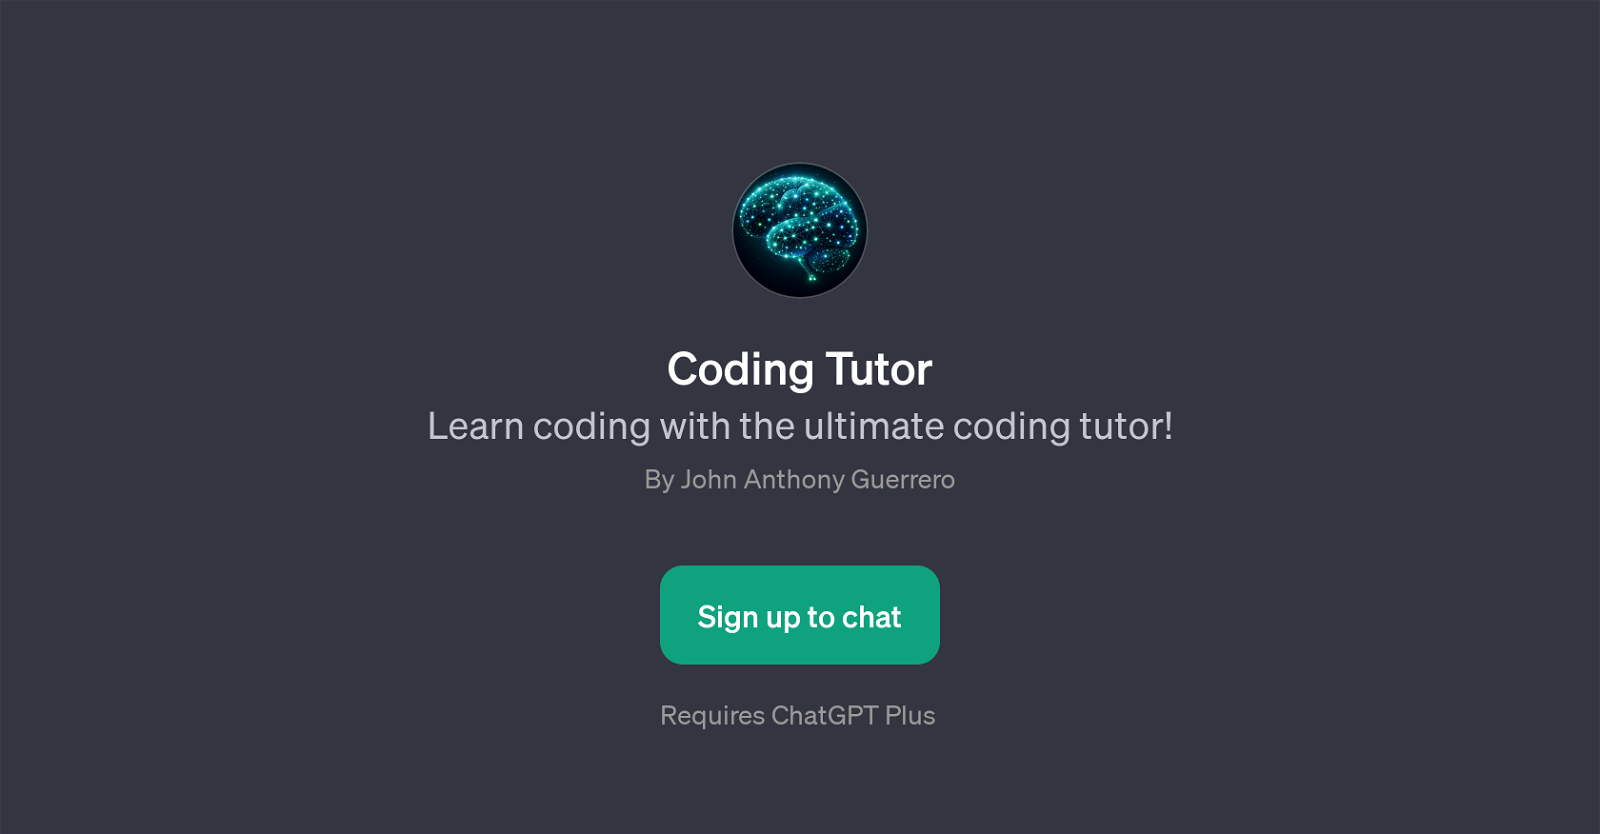 Coding Tutor website